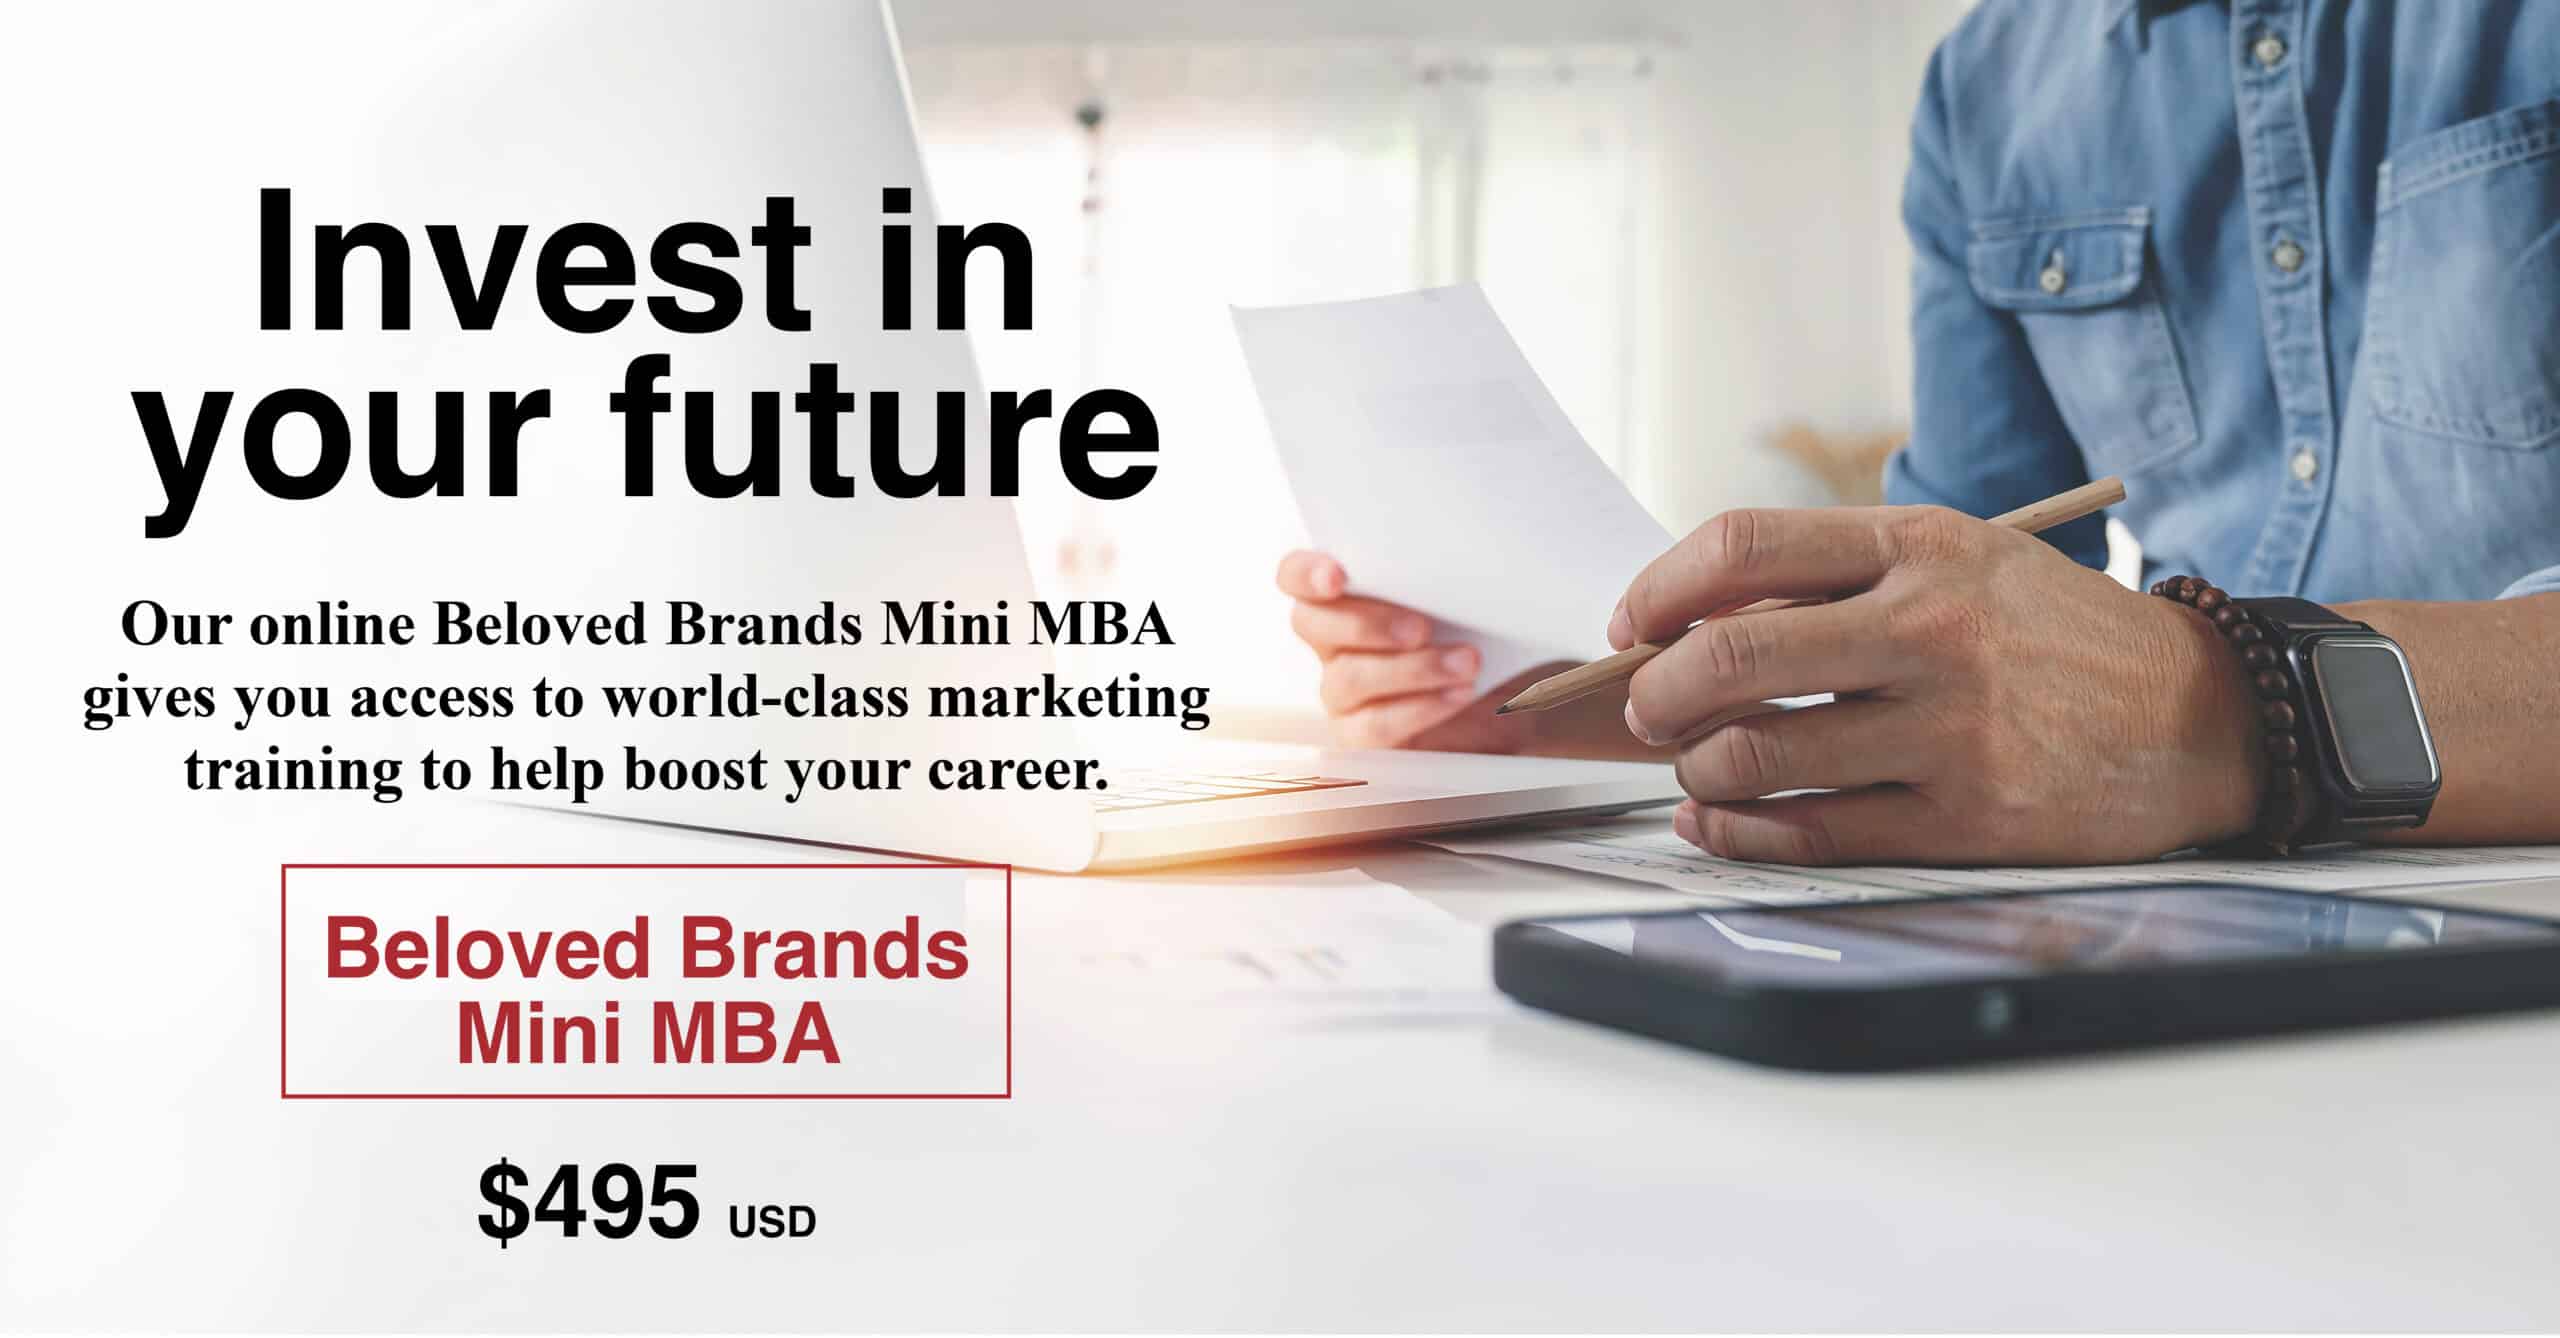 Mini MBA brand management, online marketing course